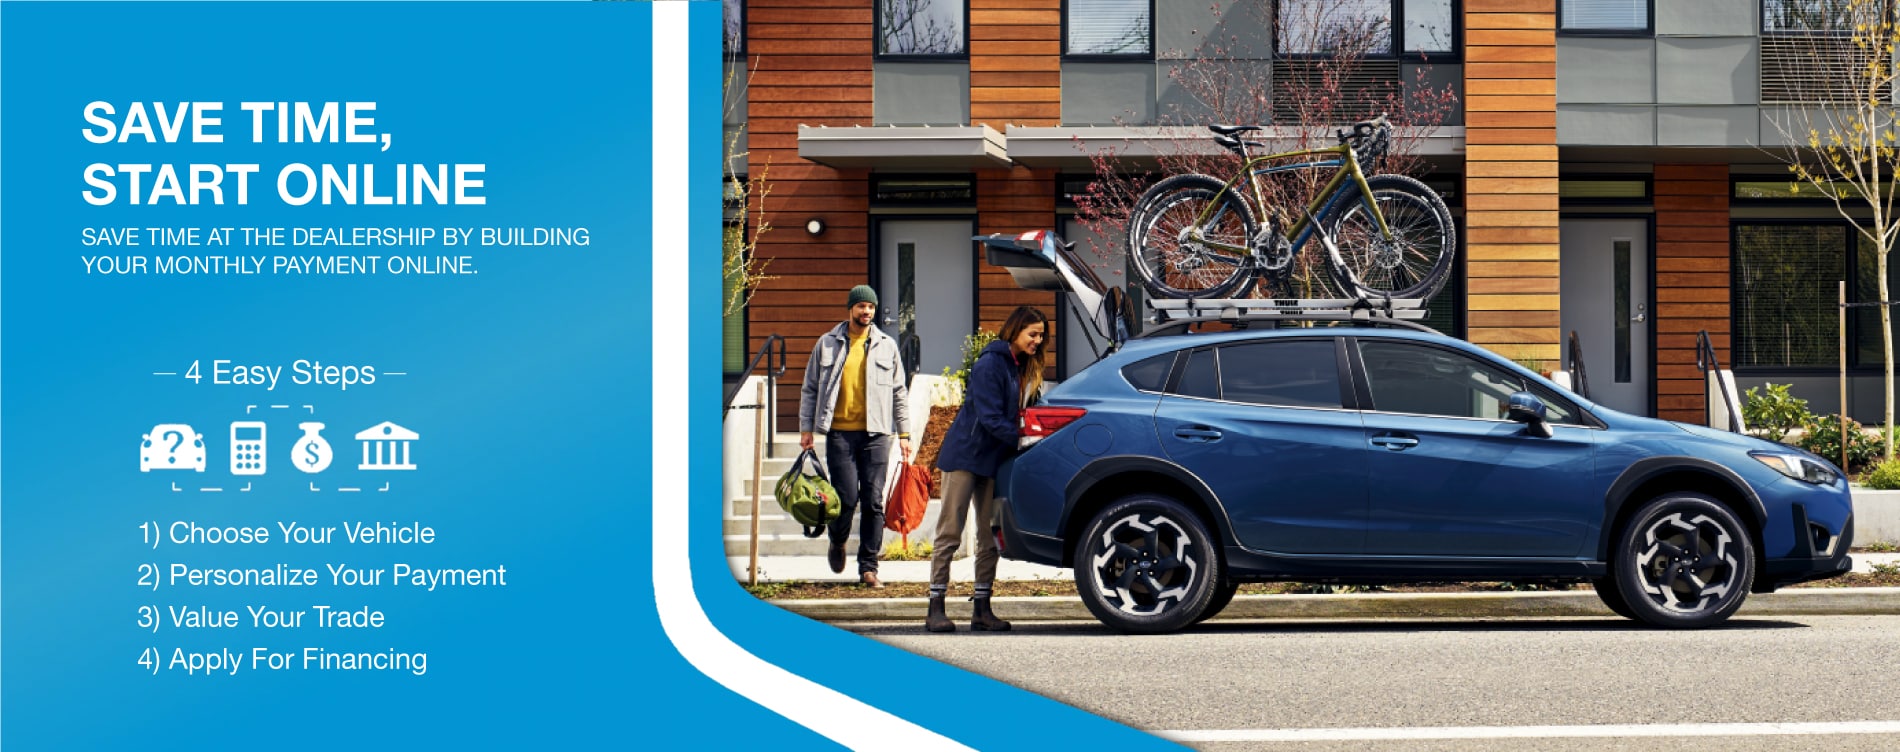 Save Time, Start Online with Subaru of Spokane